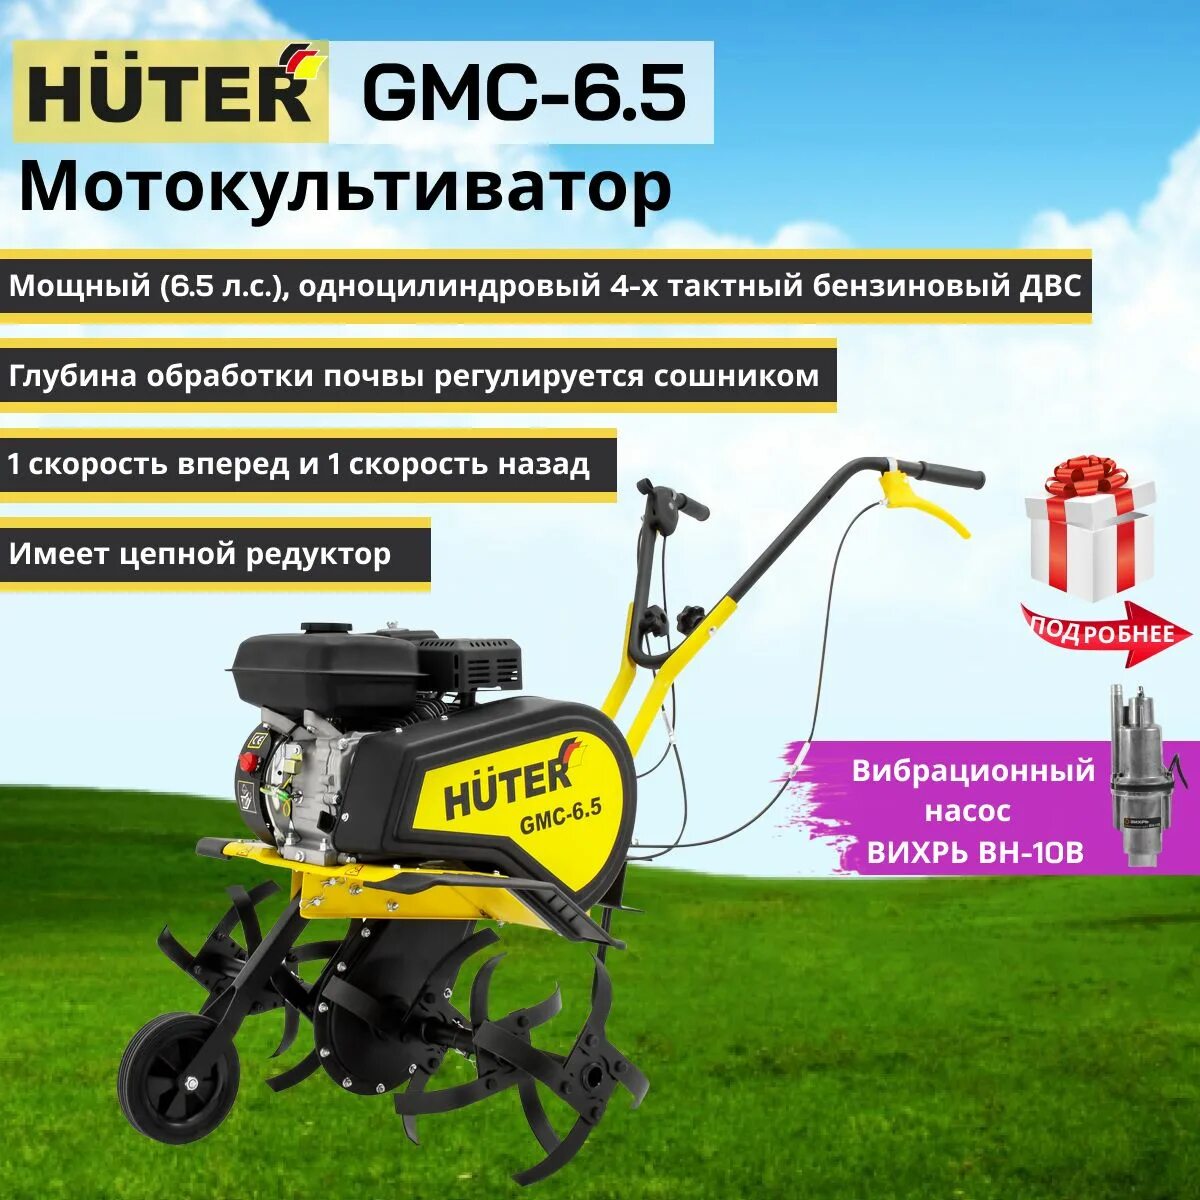 Мотокультиватор GMC-6.5 Huter 70/5/6. Мотокультиватор бензиновый Huter GMC-6.5. Культиватор Хутер GMC 6.5. Мотокультиватор GMC-5.5 Huter. Мотокультиватор хутер 6.5